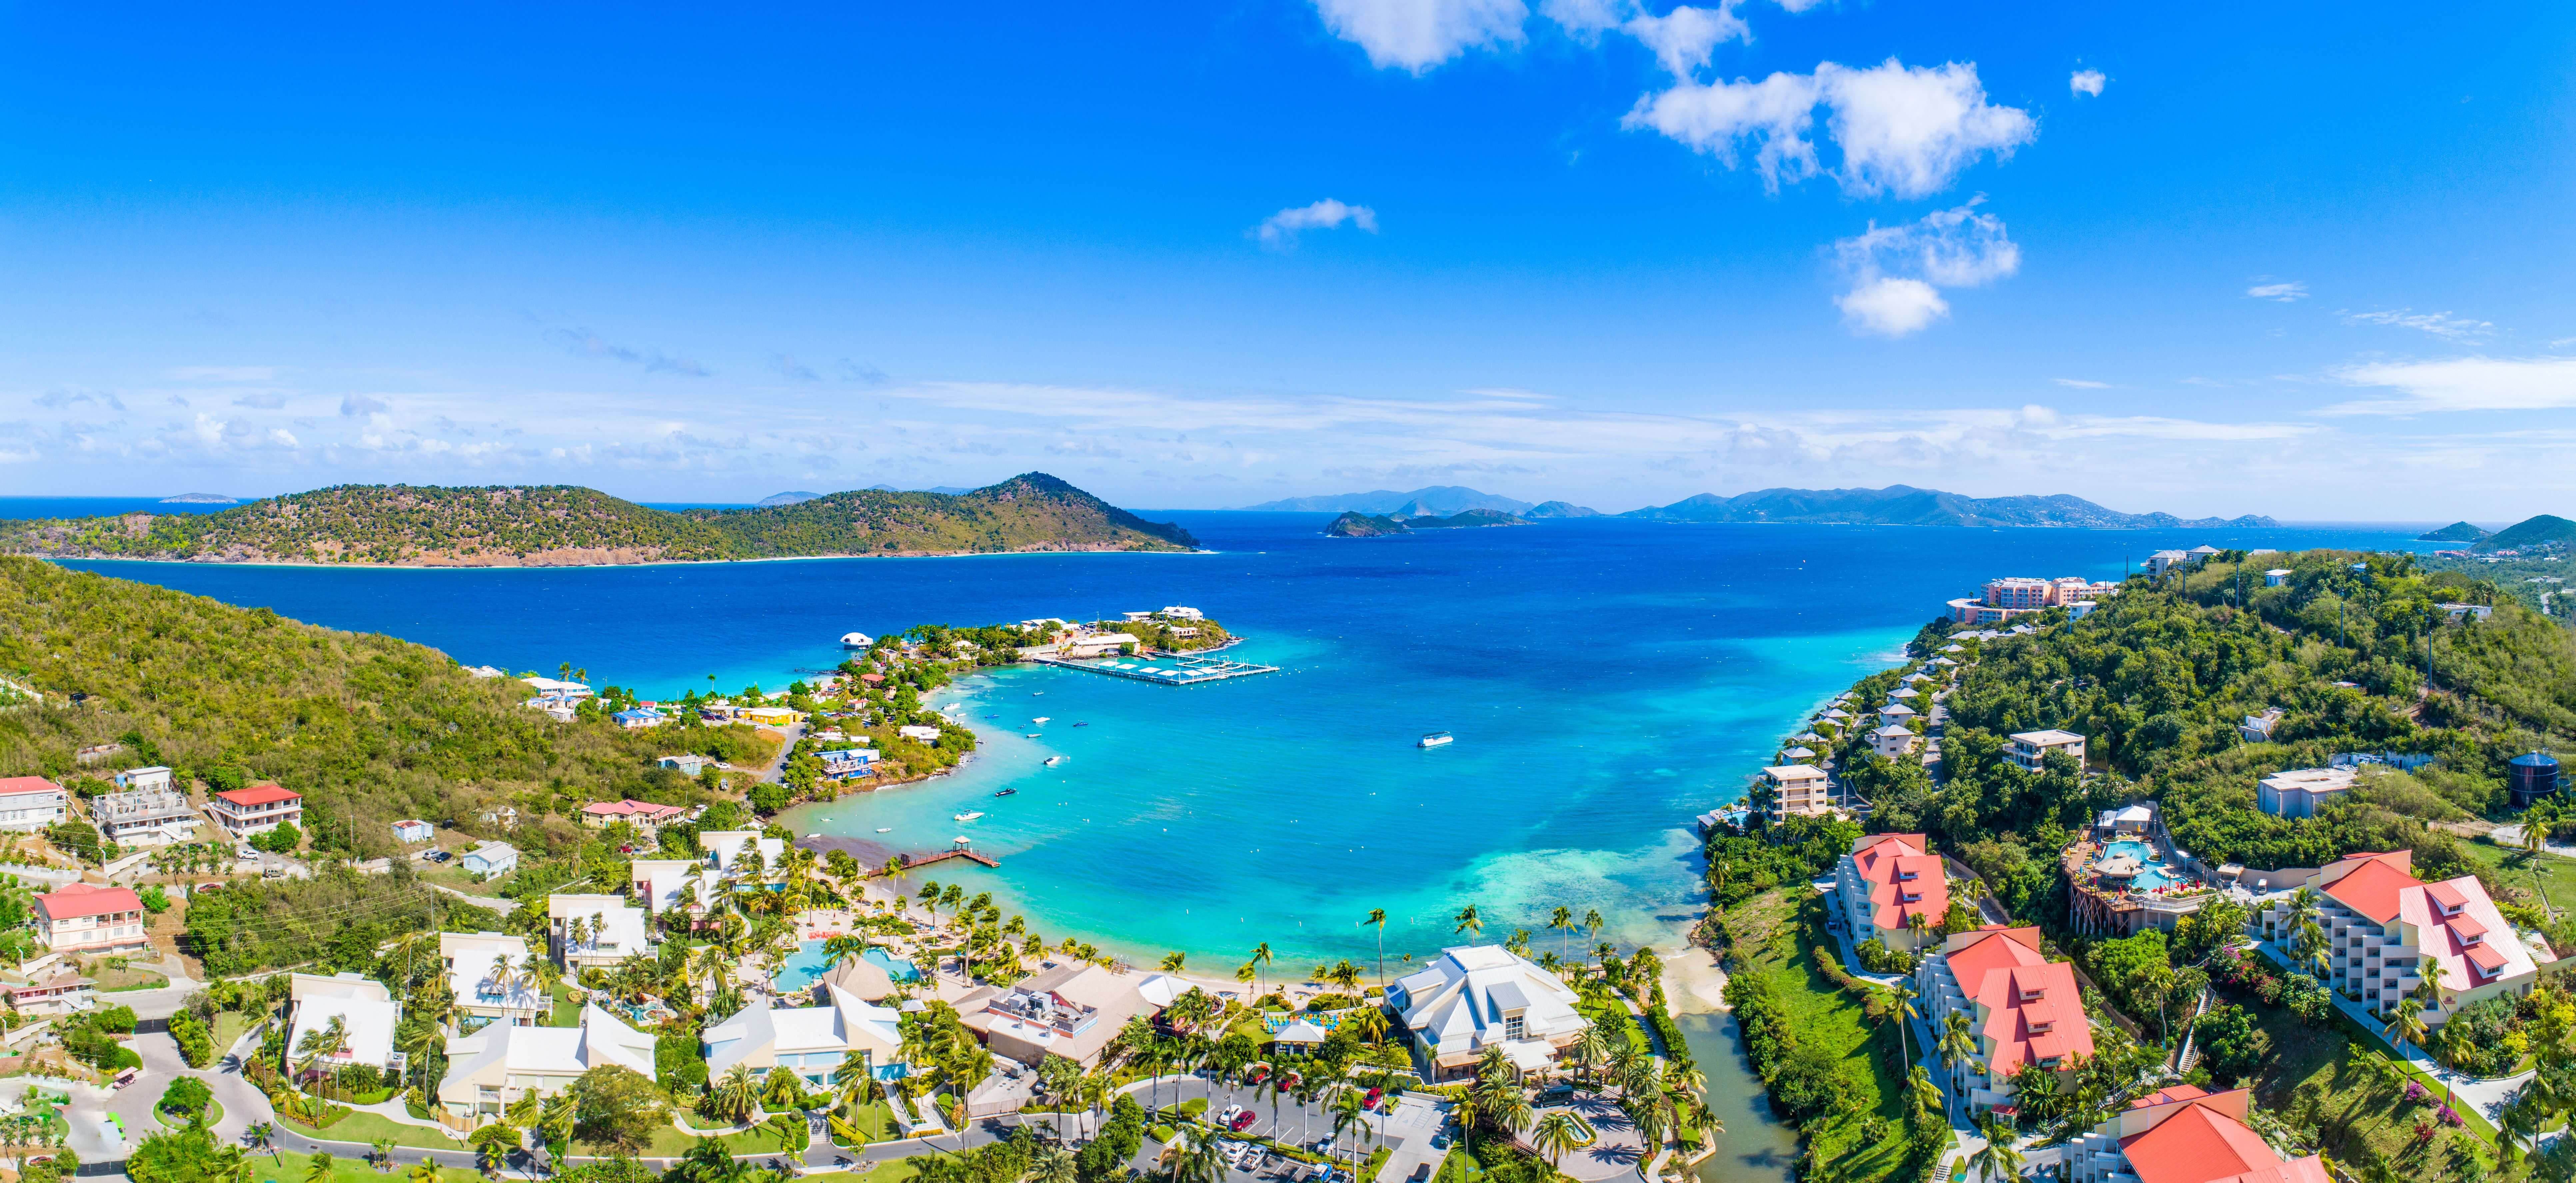 image of US Virgin Islands